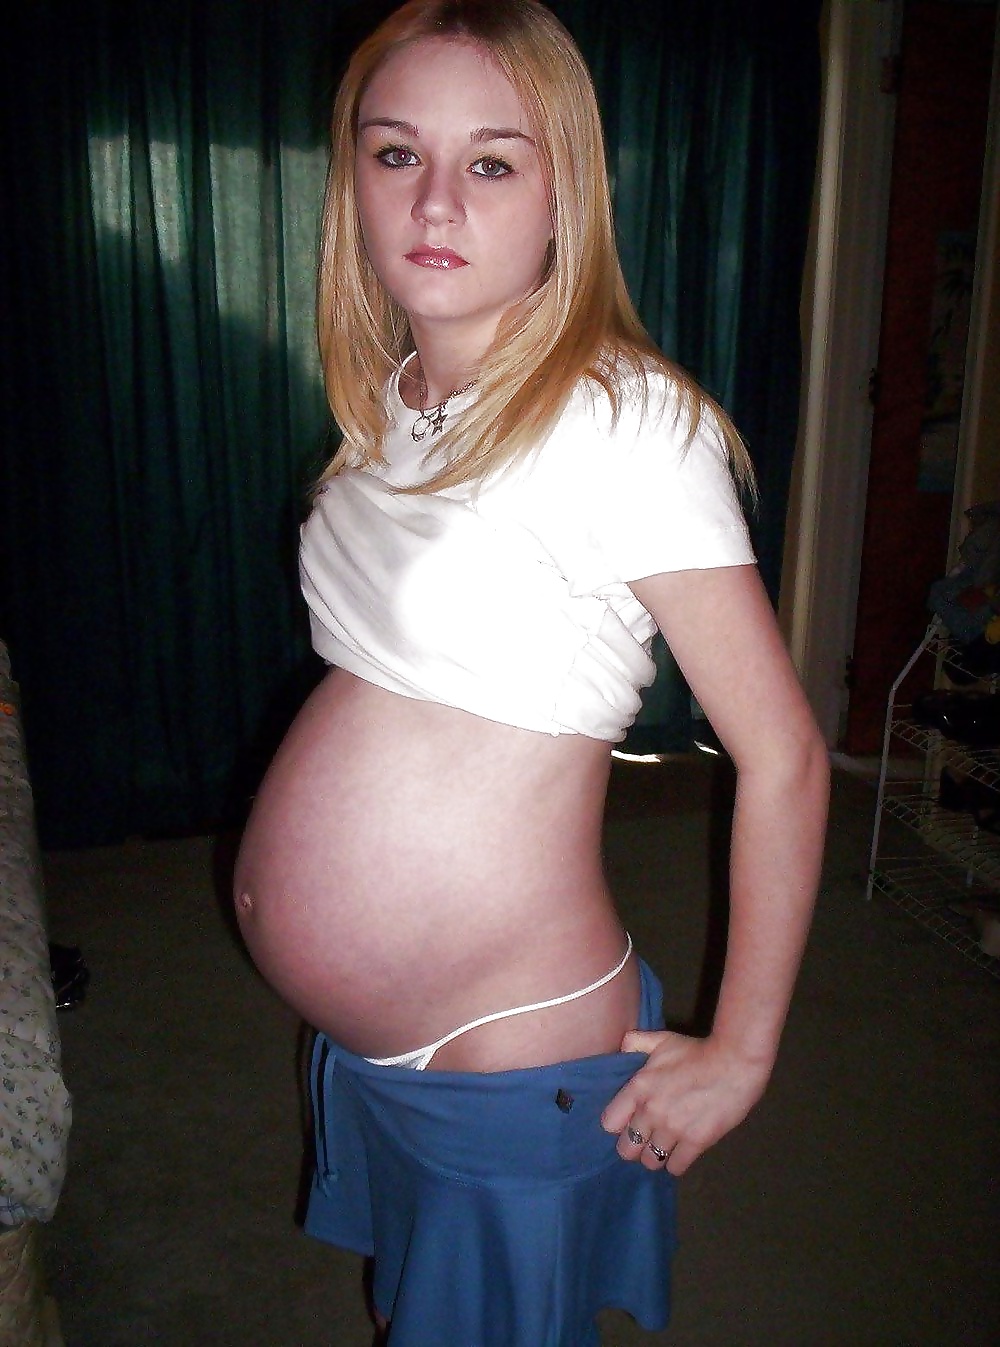 Enceinte Ventre nue - Naked pregnant belly 3 #30650579